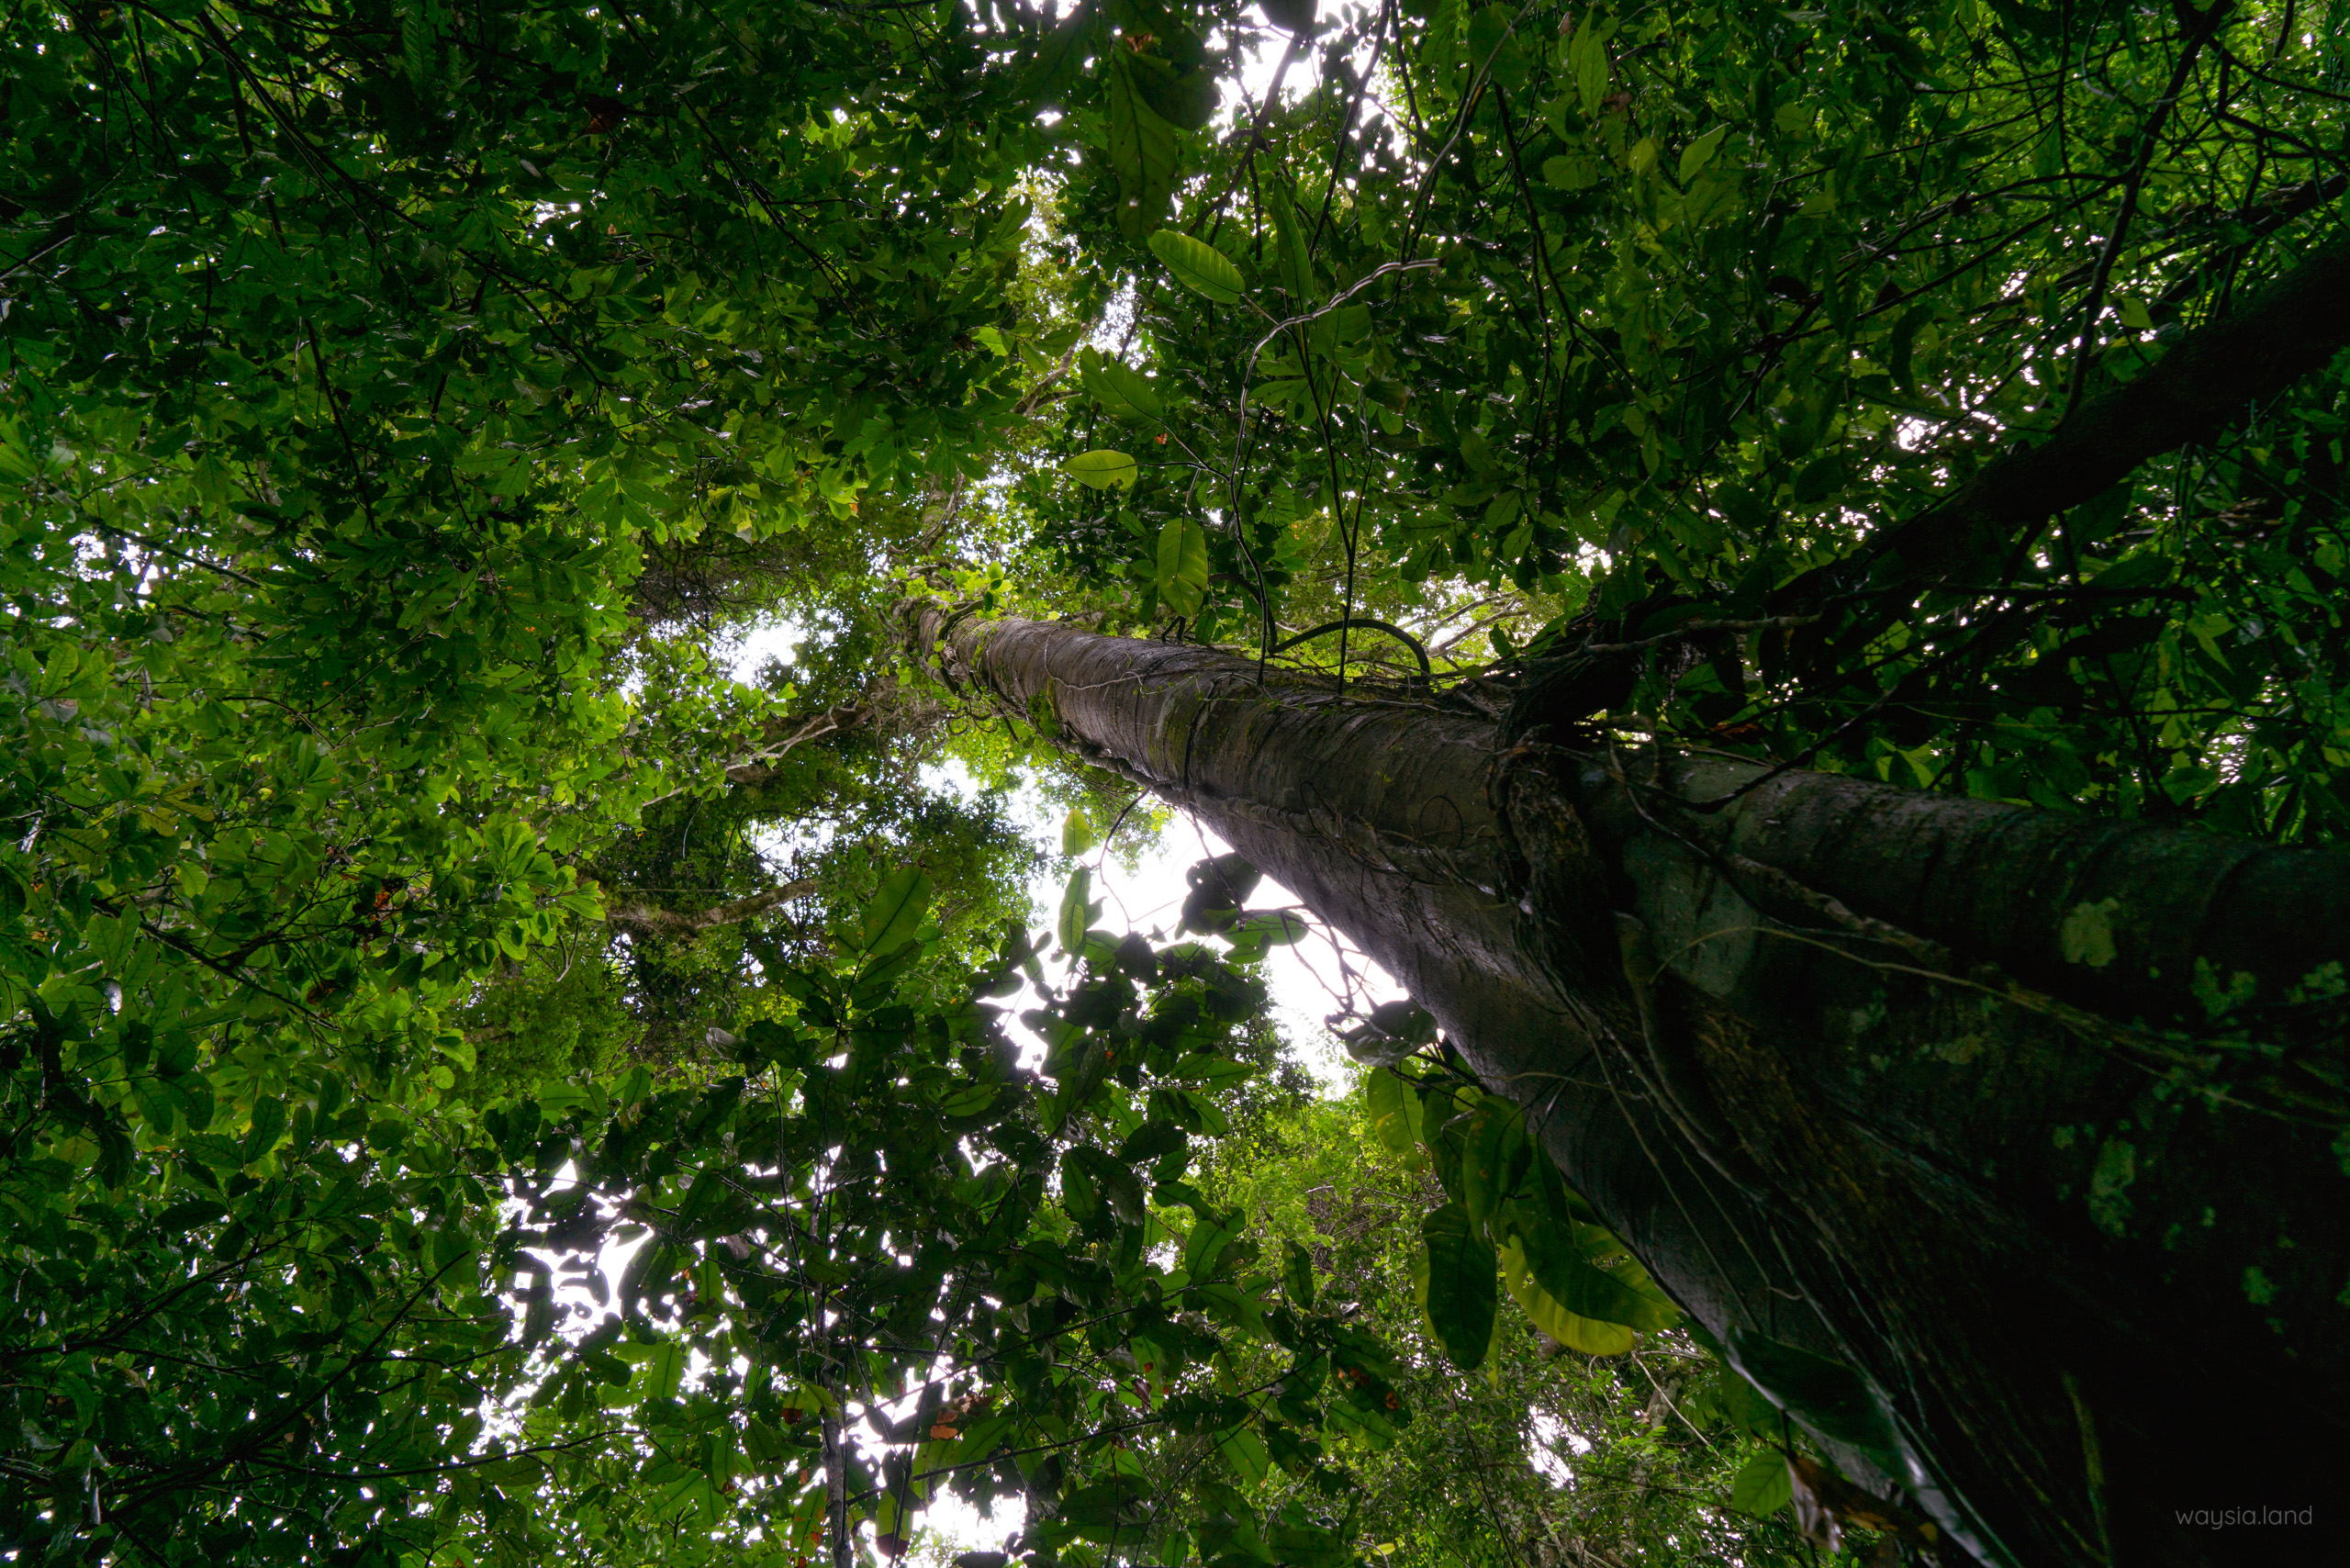 Manu, Peru – The Amazon Rainforest